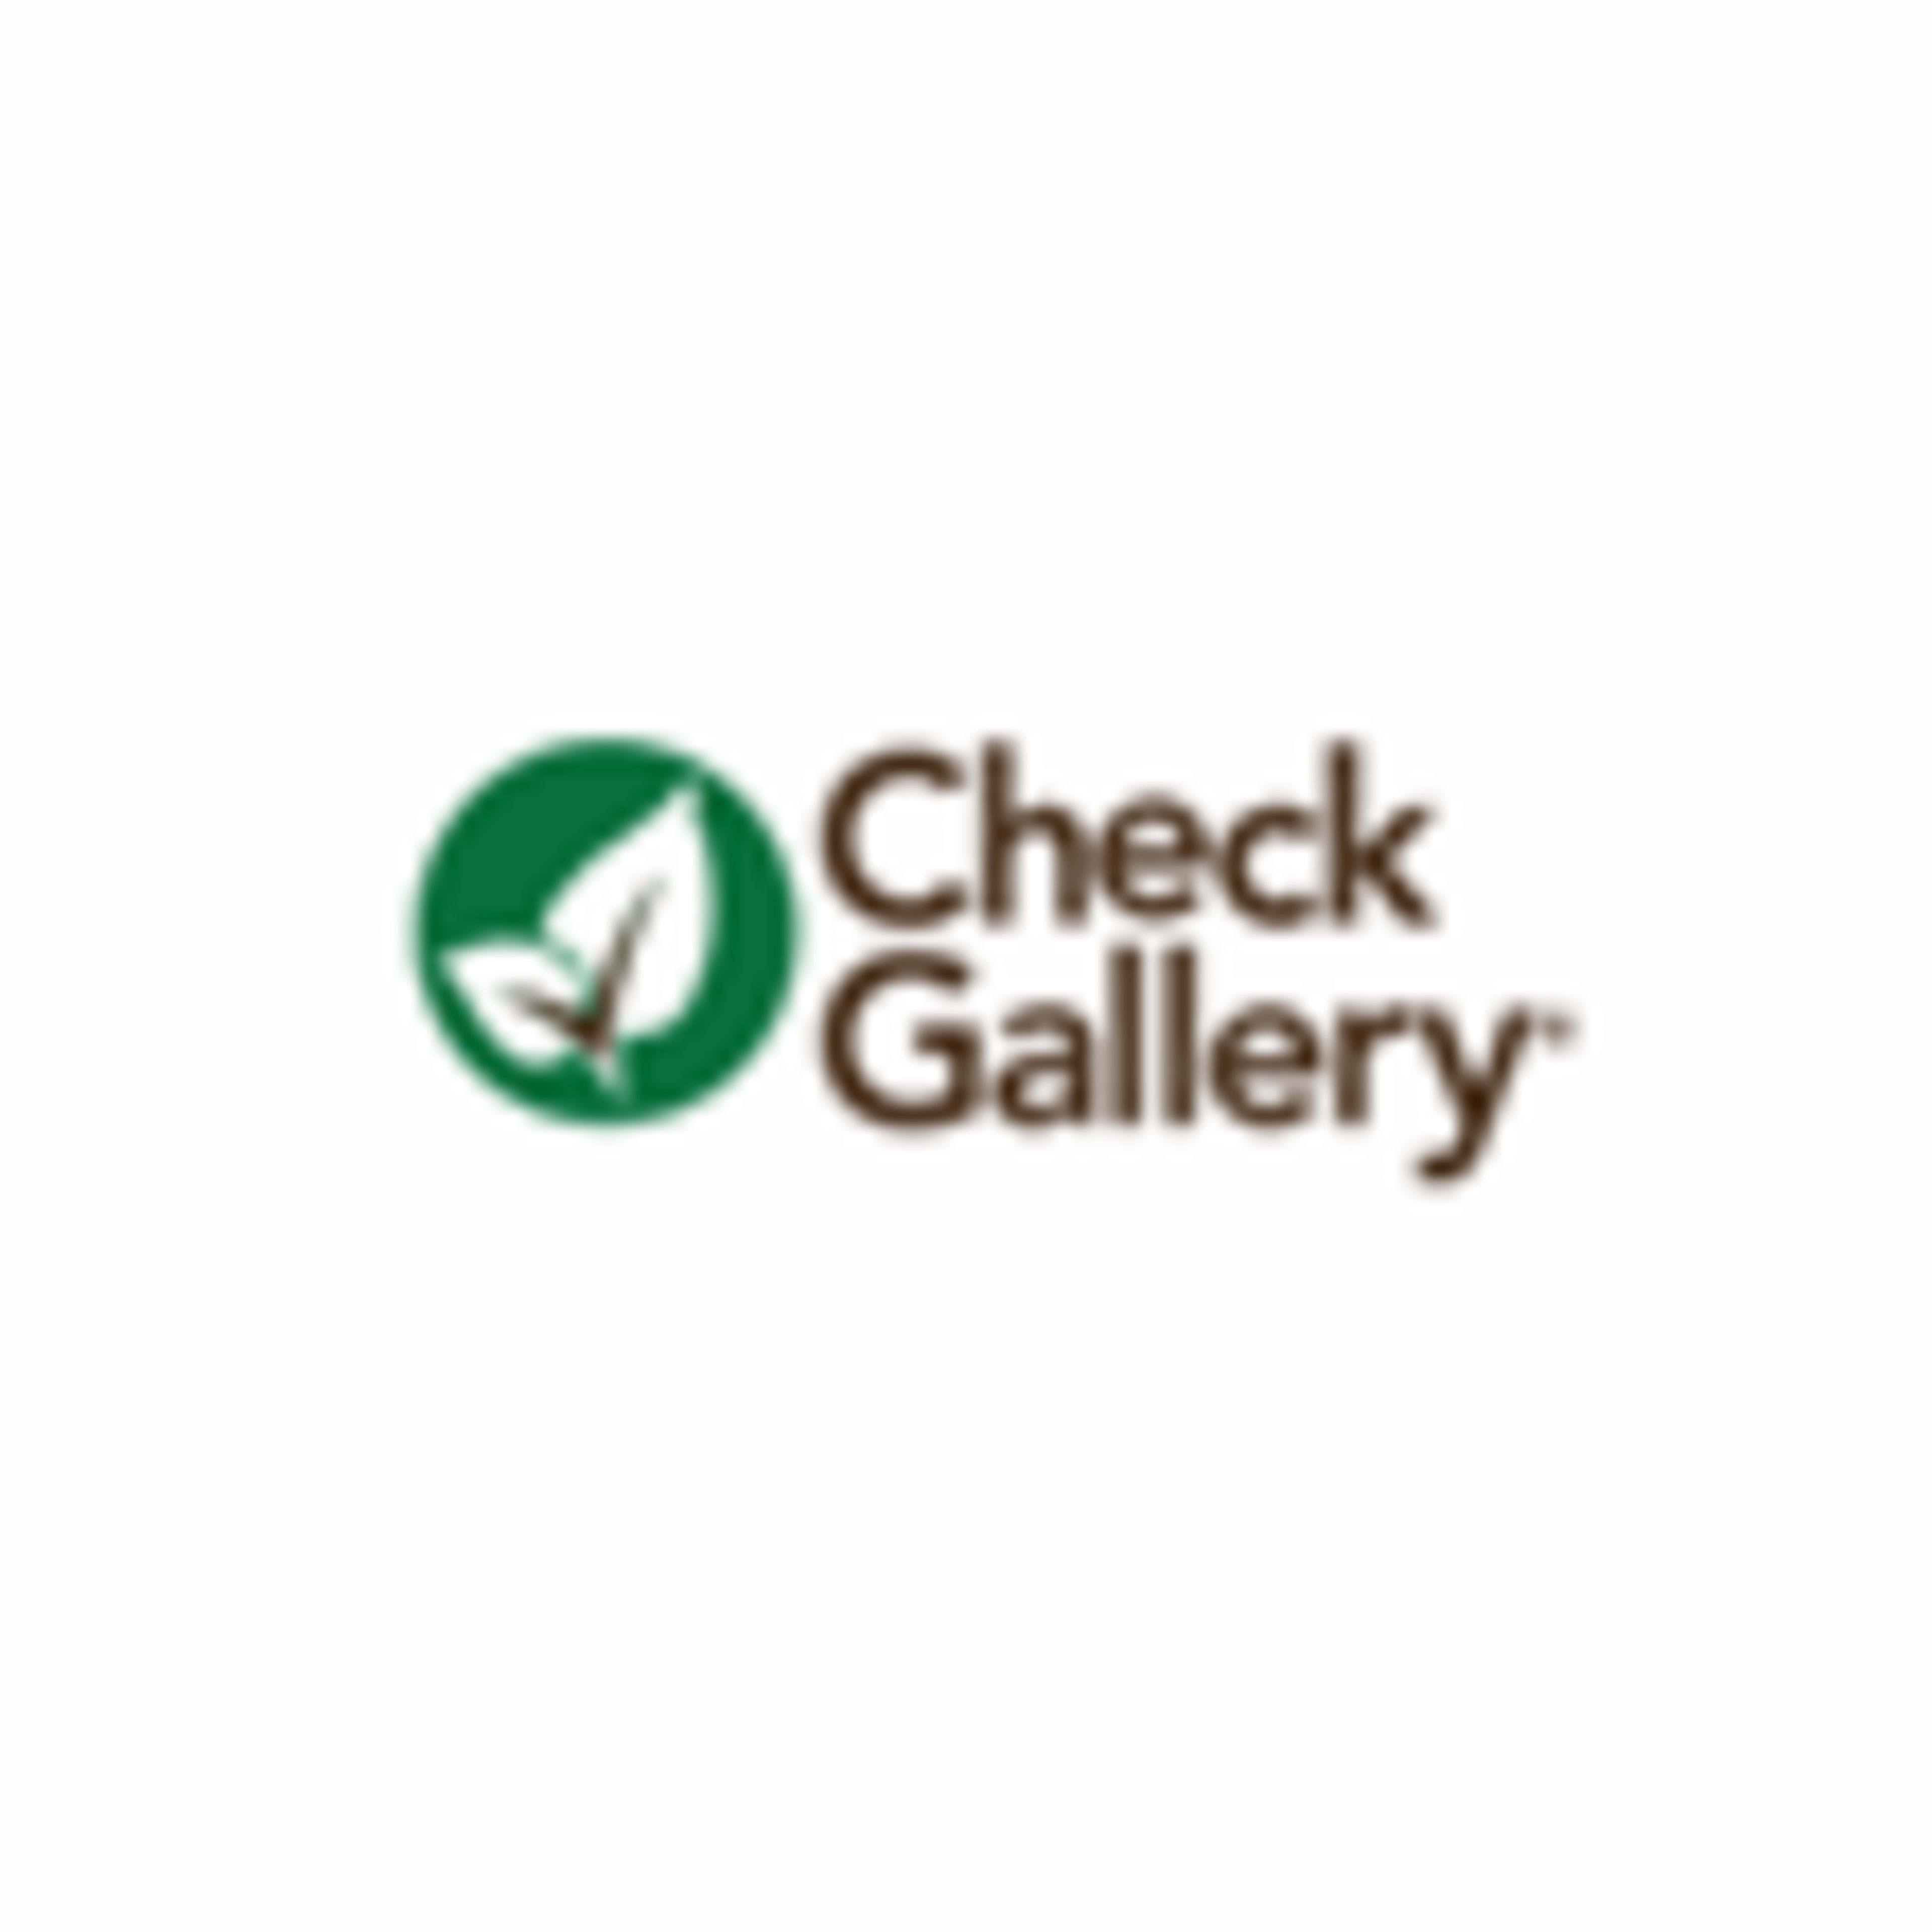 The Check GalleryCode